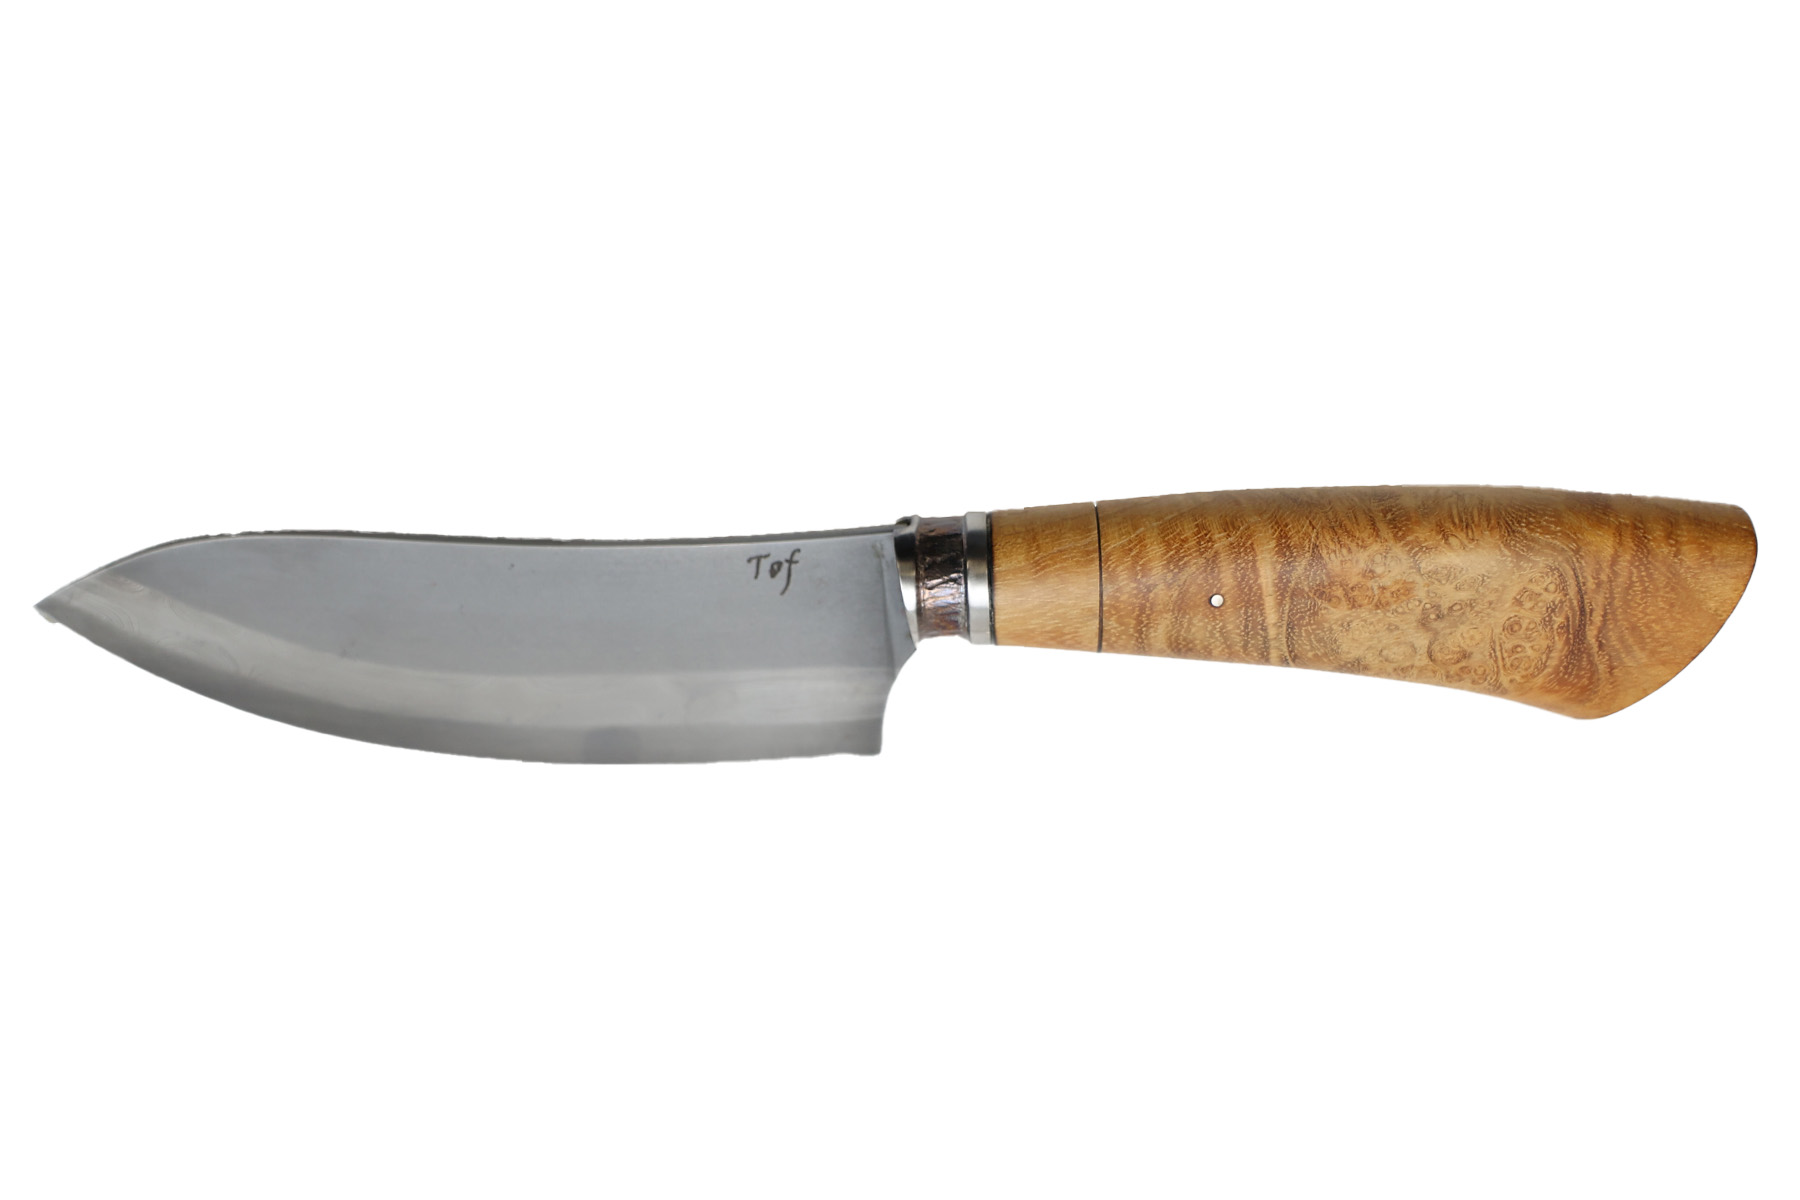 Couteau artisanal de Christophe Andrian " TOF" en loupe d' Acacia